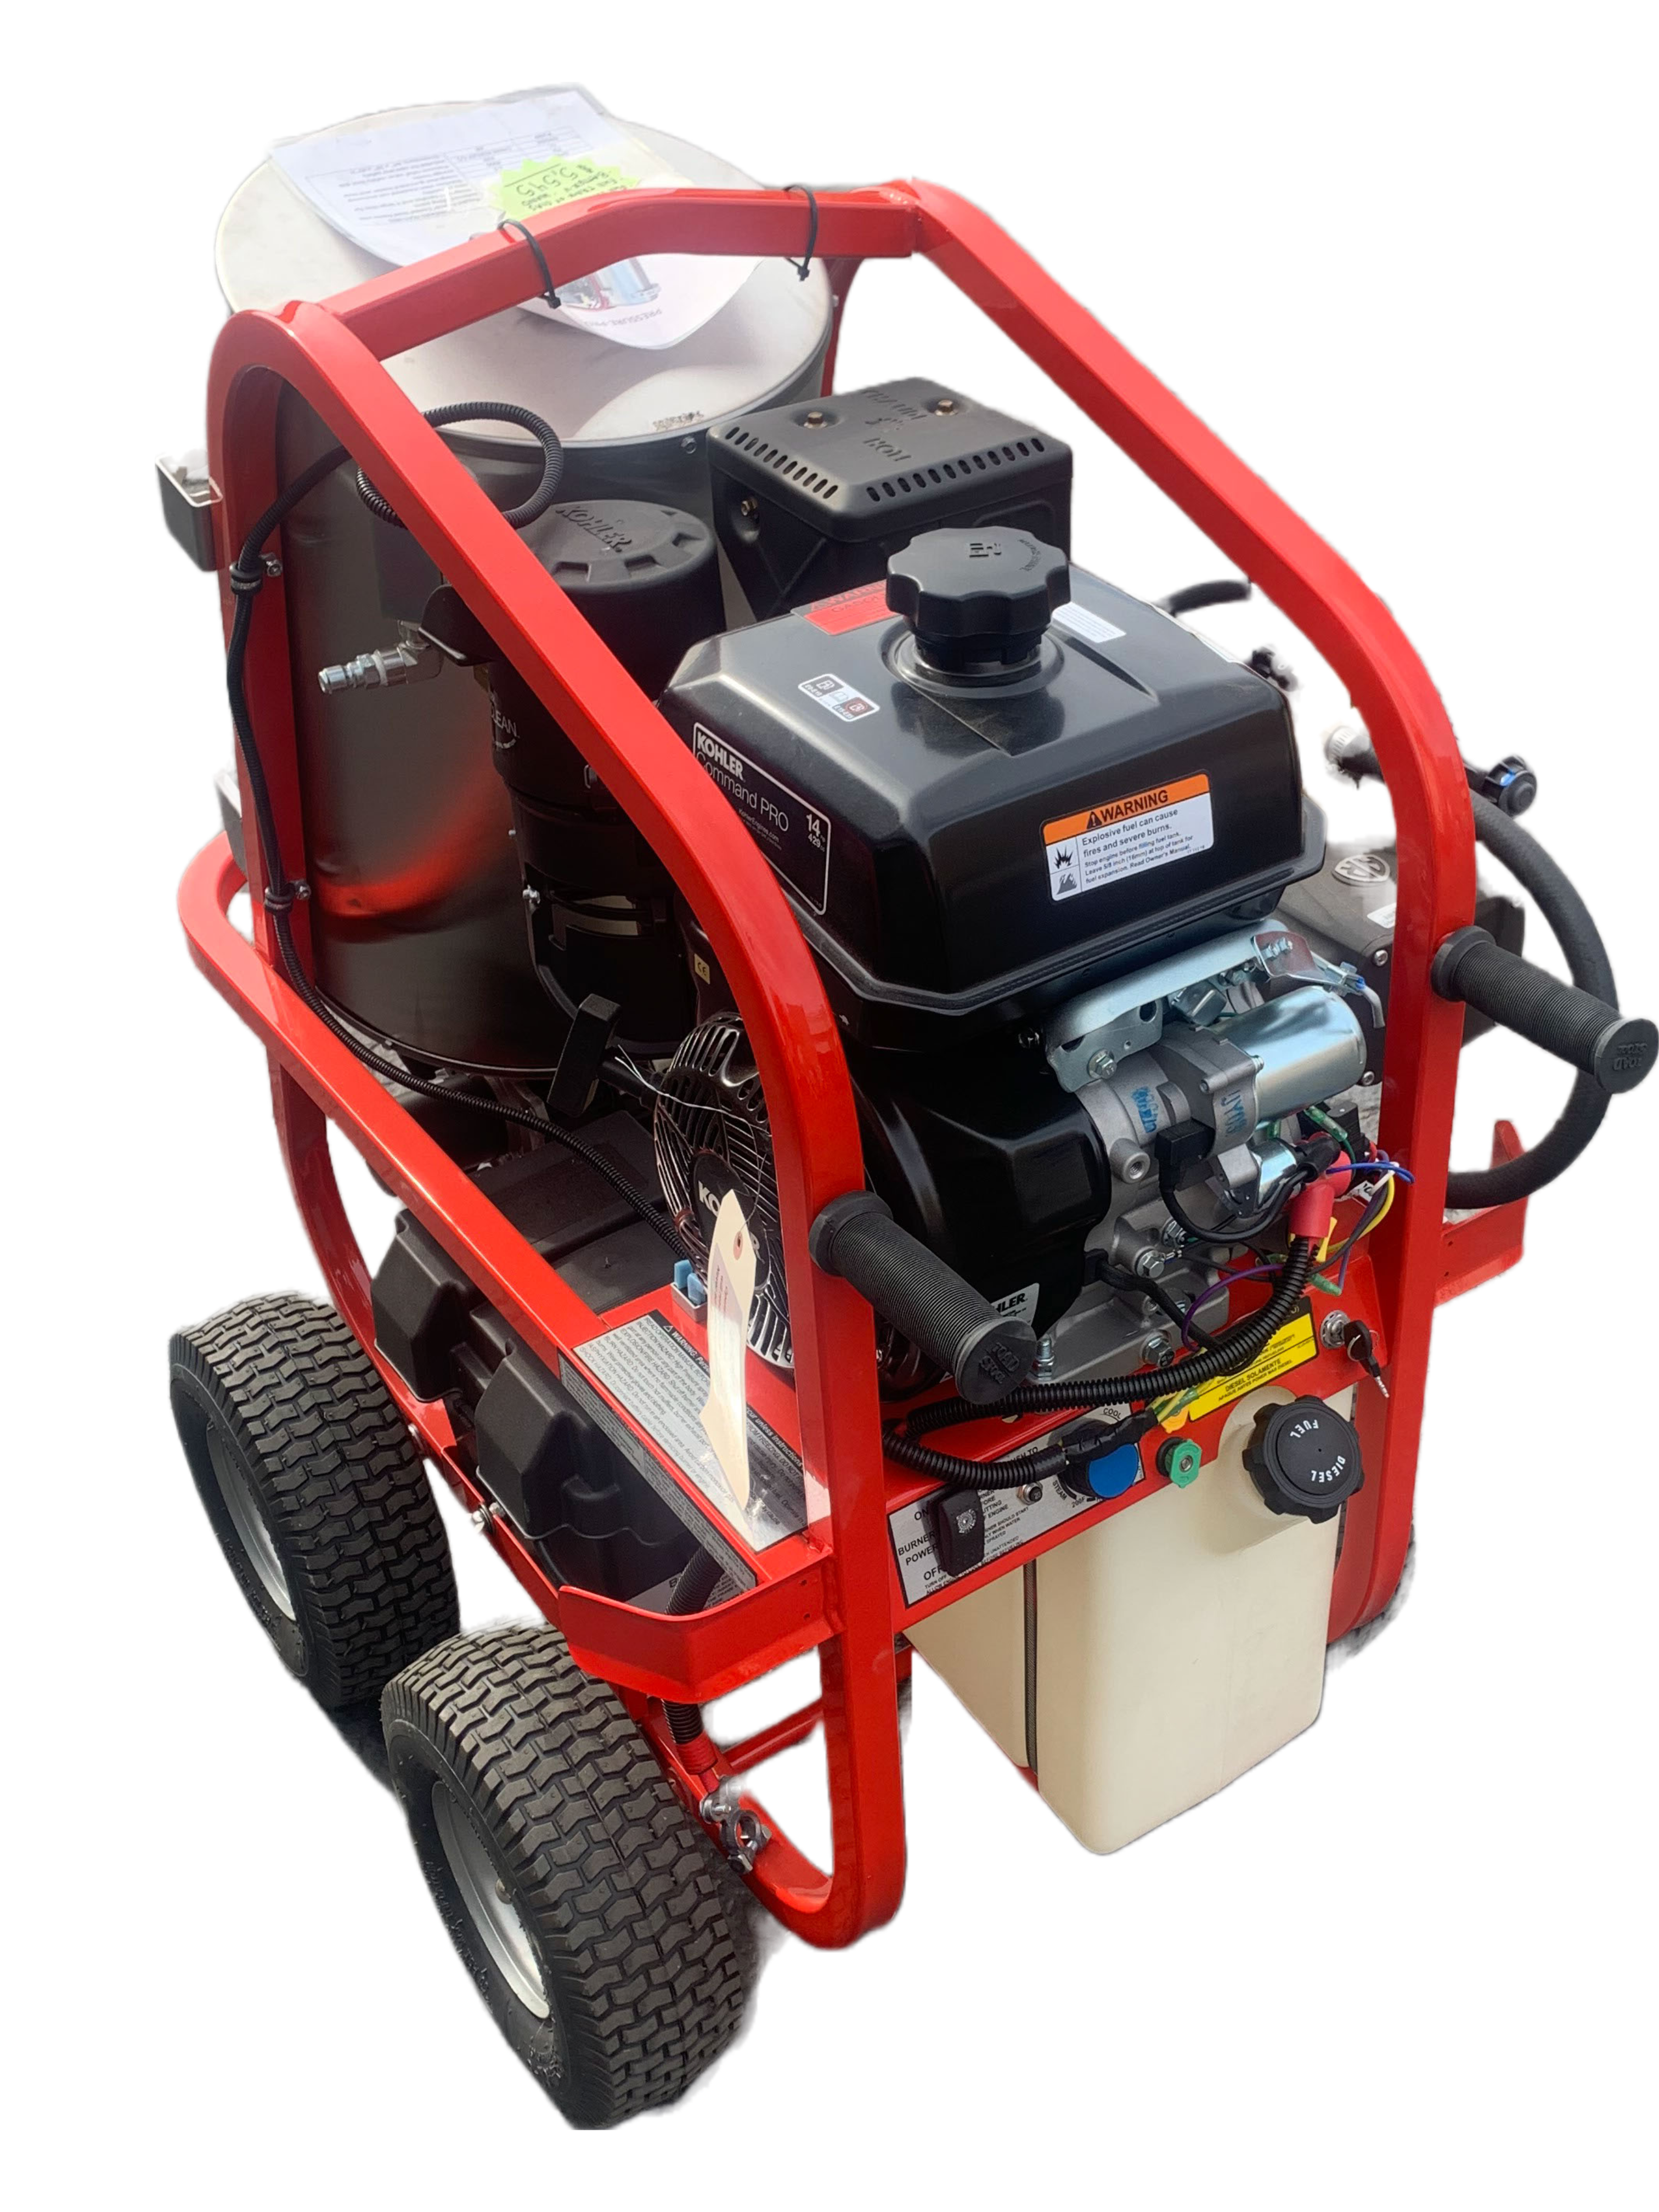 Pressure Pro Dirt Blaster SH40004KH Hot Water Dirt Blaster - Contractor's Maintenance Service